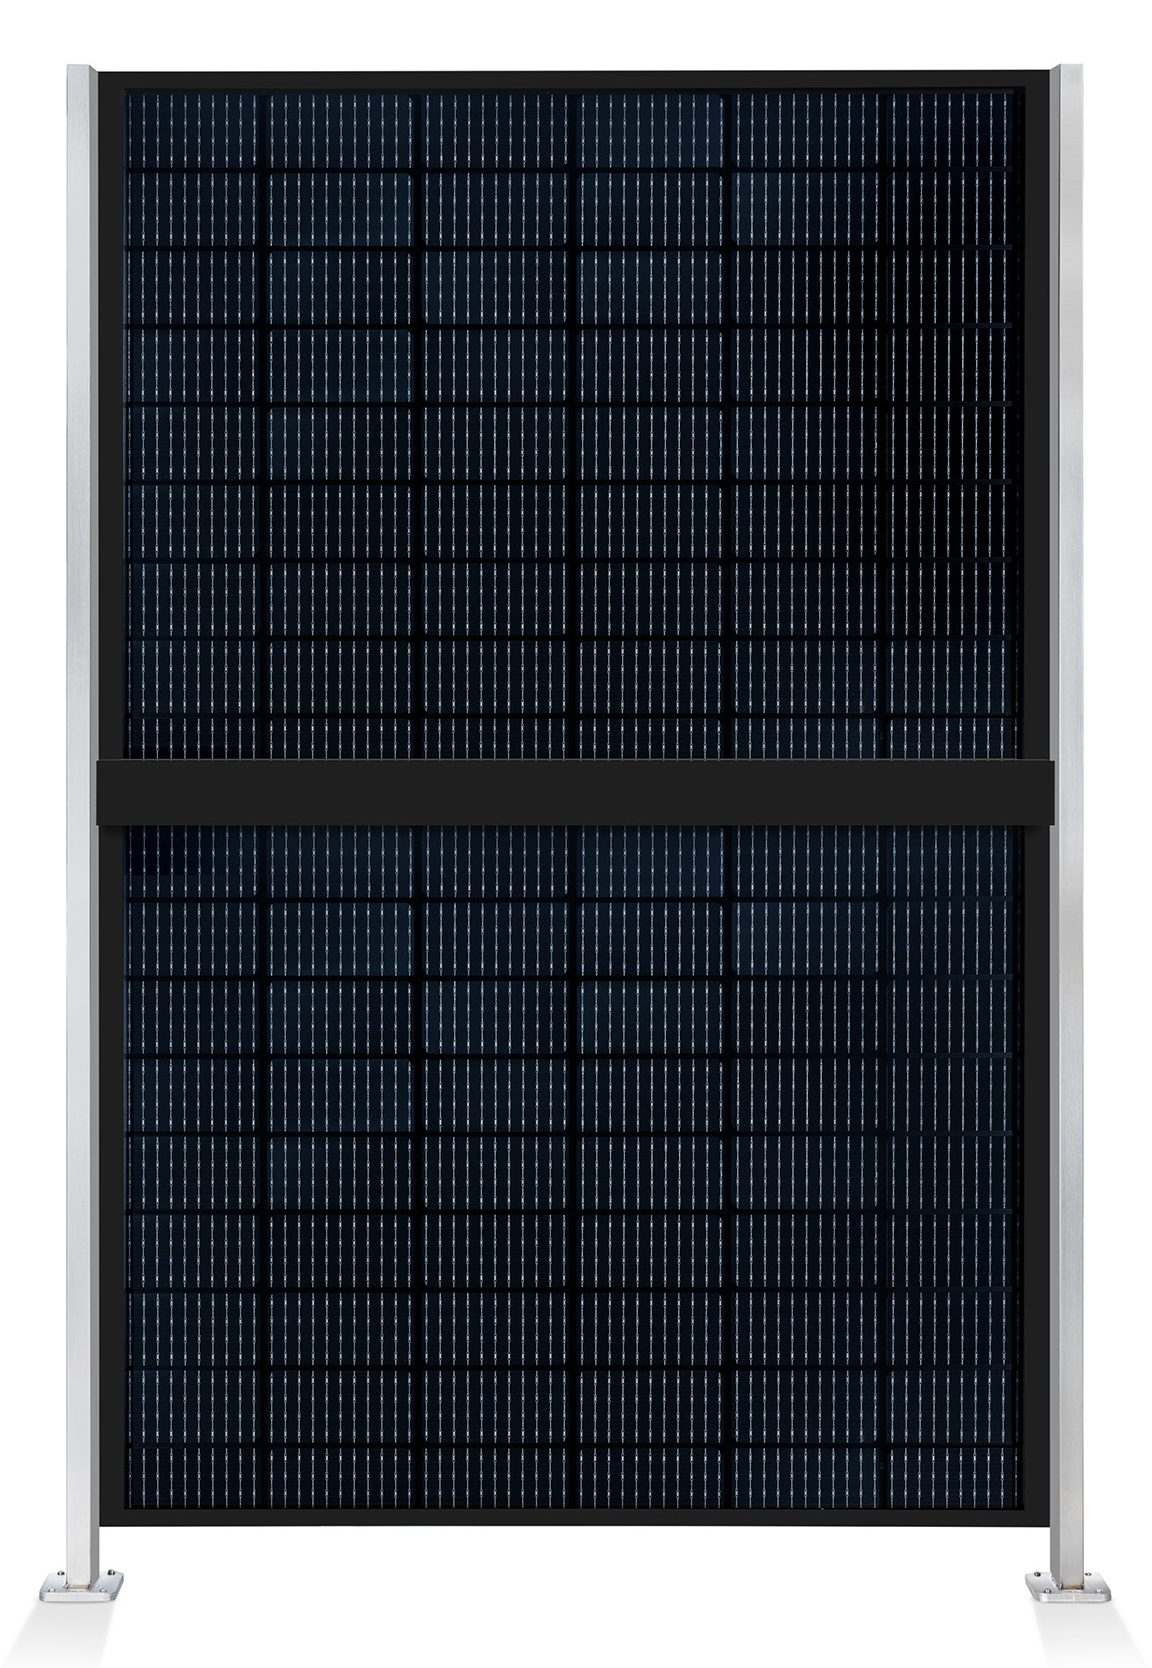 ausschnitt_0004_element-solar-sichtschutz-pv-photovoltaik-zaun-collection-hutter-panel-schwarz-pfosten-edelstahl-rueckse.jpg